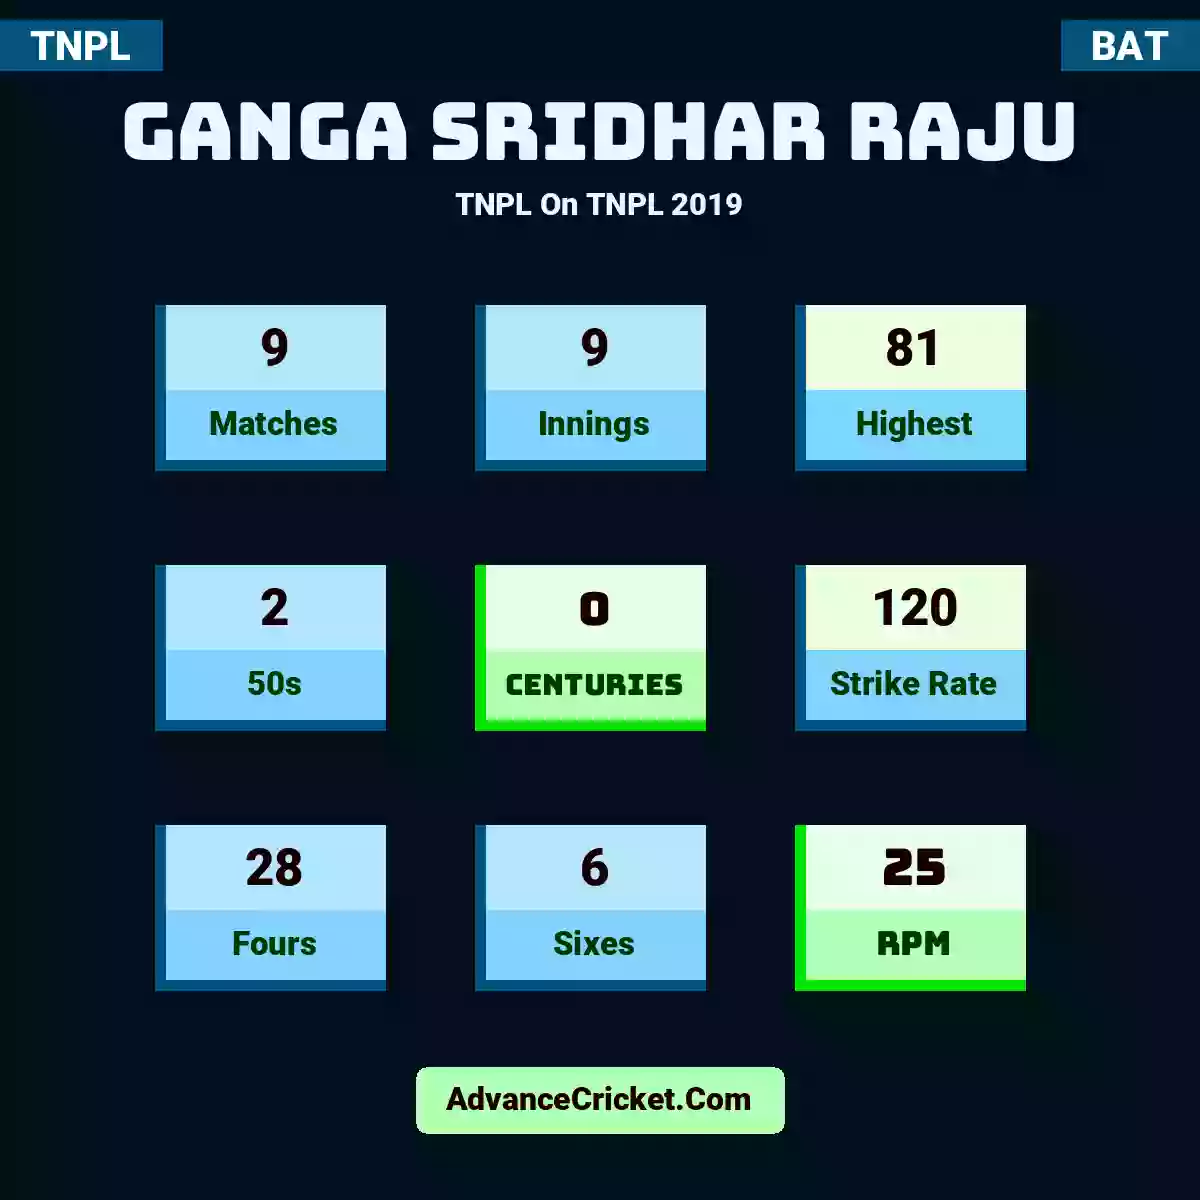 Ganga Sridhar Raju TNPL  On TNPL 2019, Ganga Sridhar Raju played 9 matches, scored 81 runs as highest, 2 half-centuries, and 0 centuries, with a strike rate of 120. G.Raju hit 28 fours and 6 sixes, with an RPM of 25.